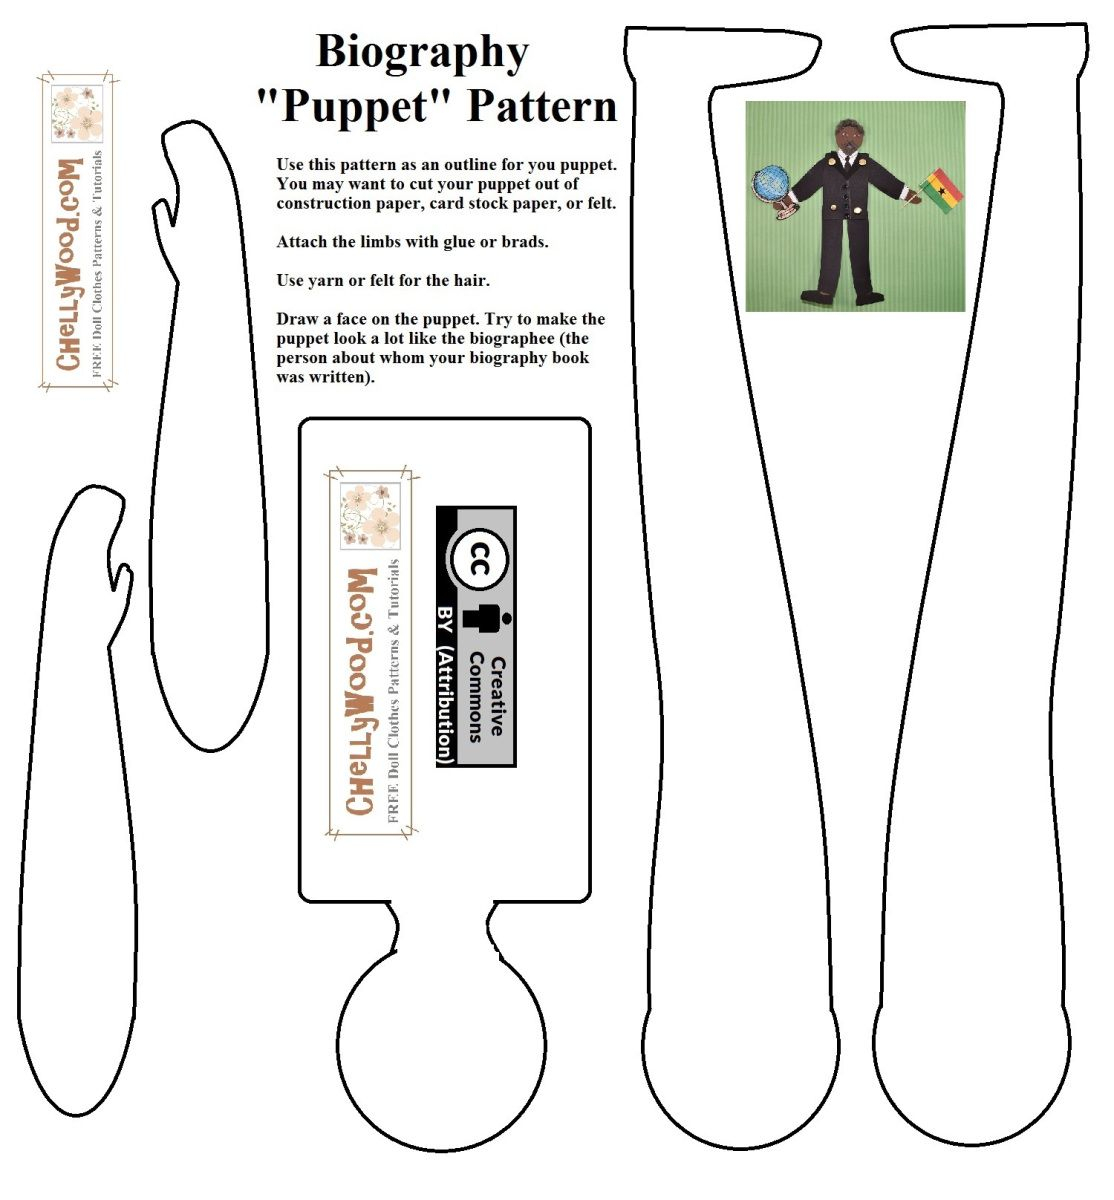 Printable Puppet Patterns FreePrintableTM com FreePrintableTM com